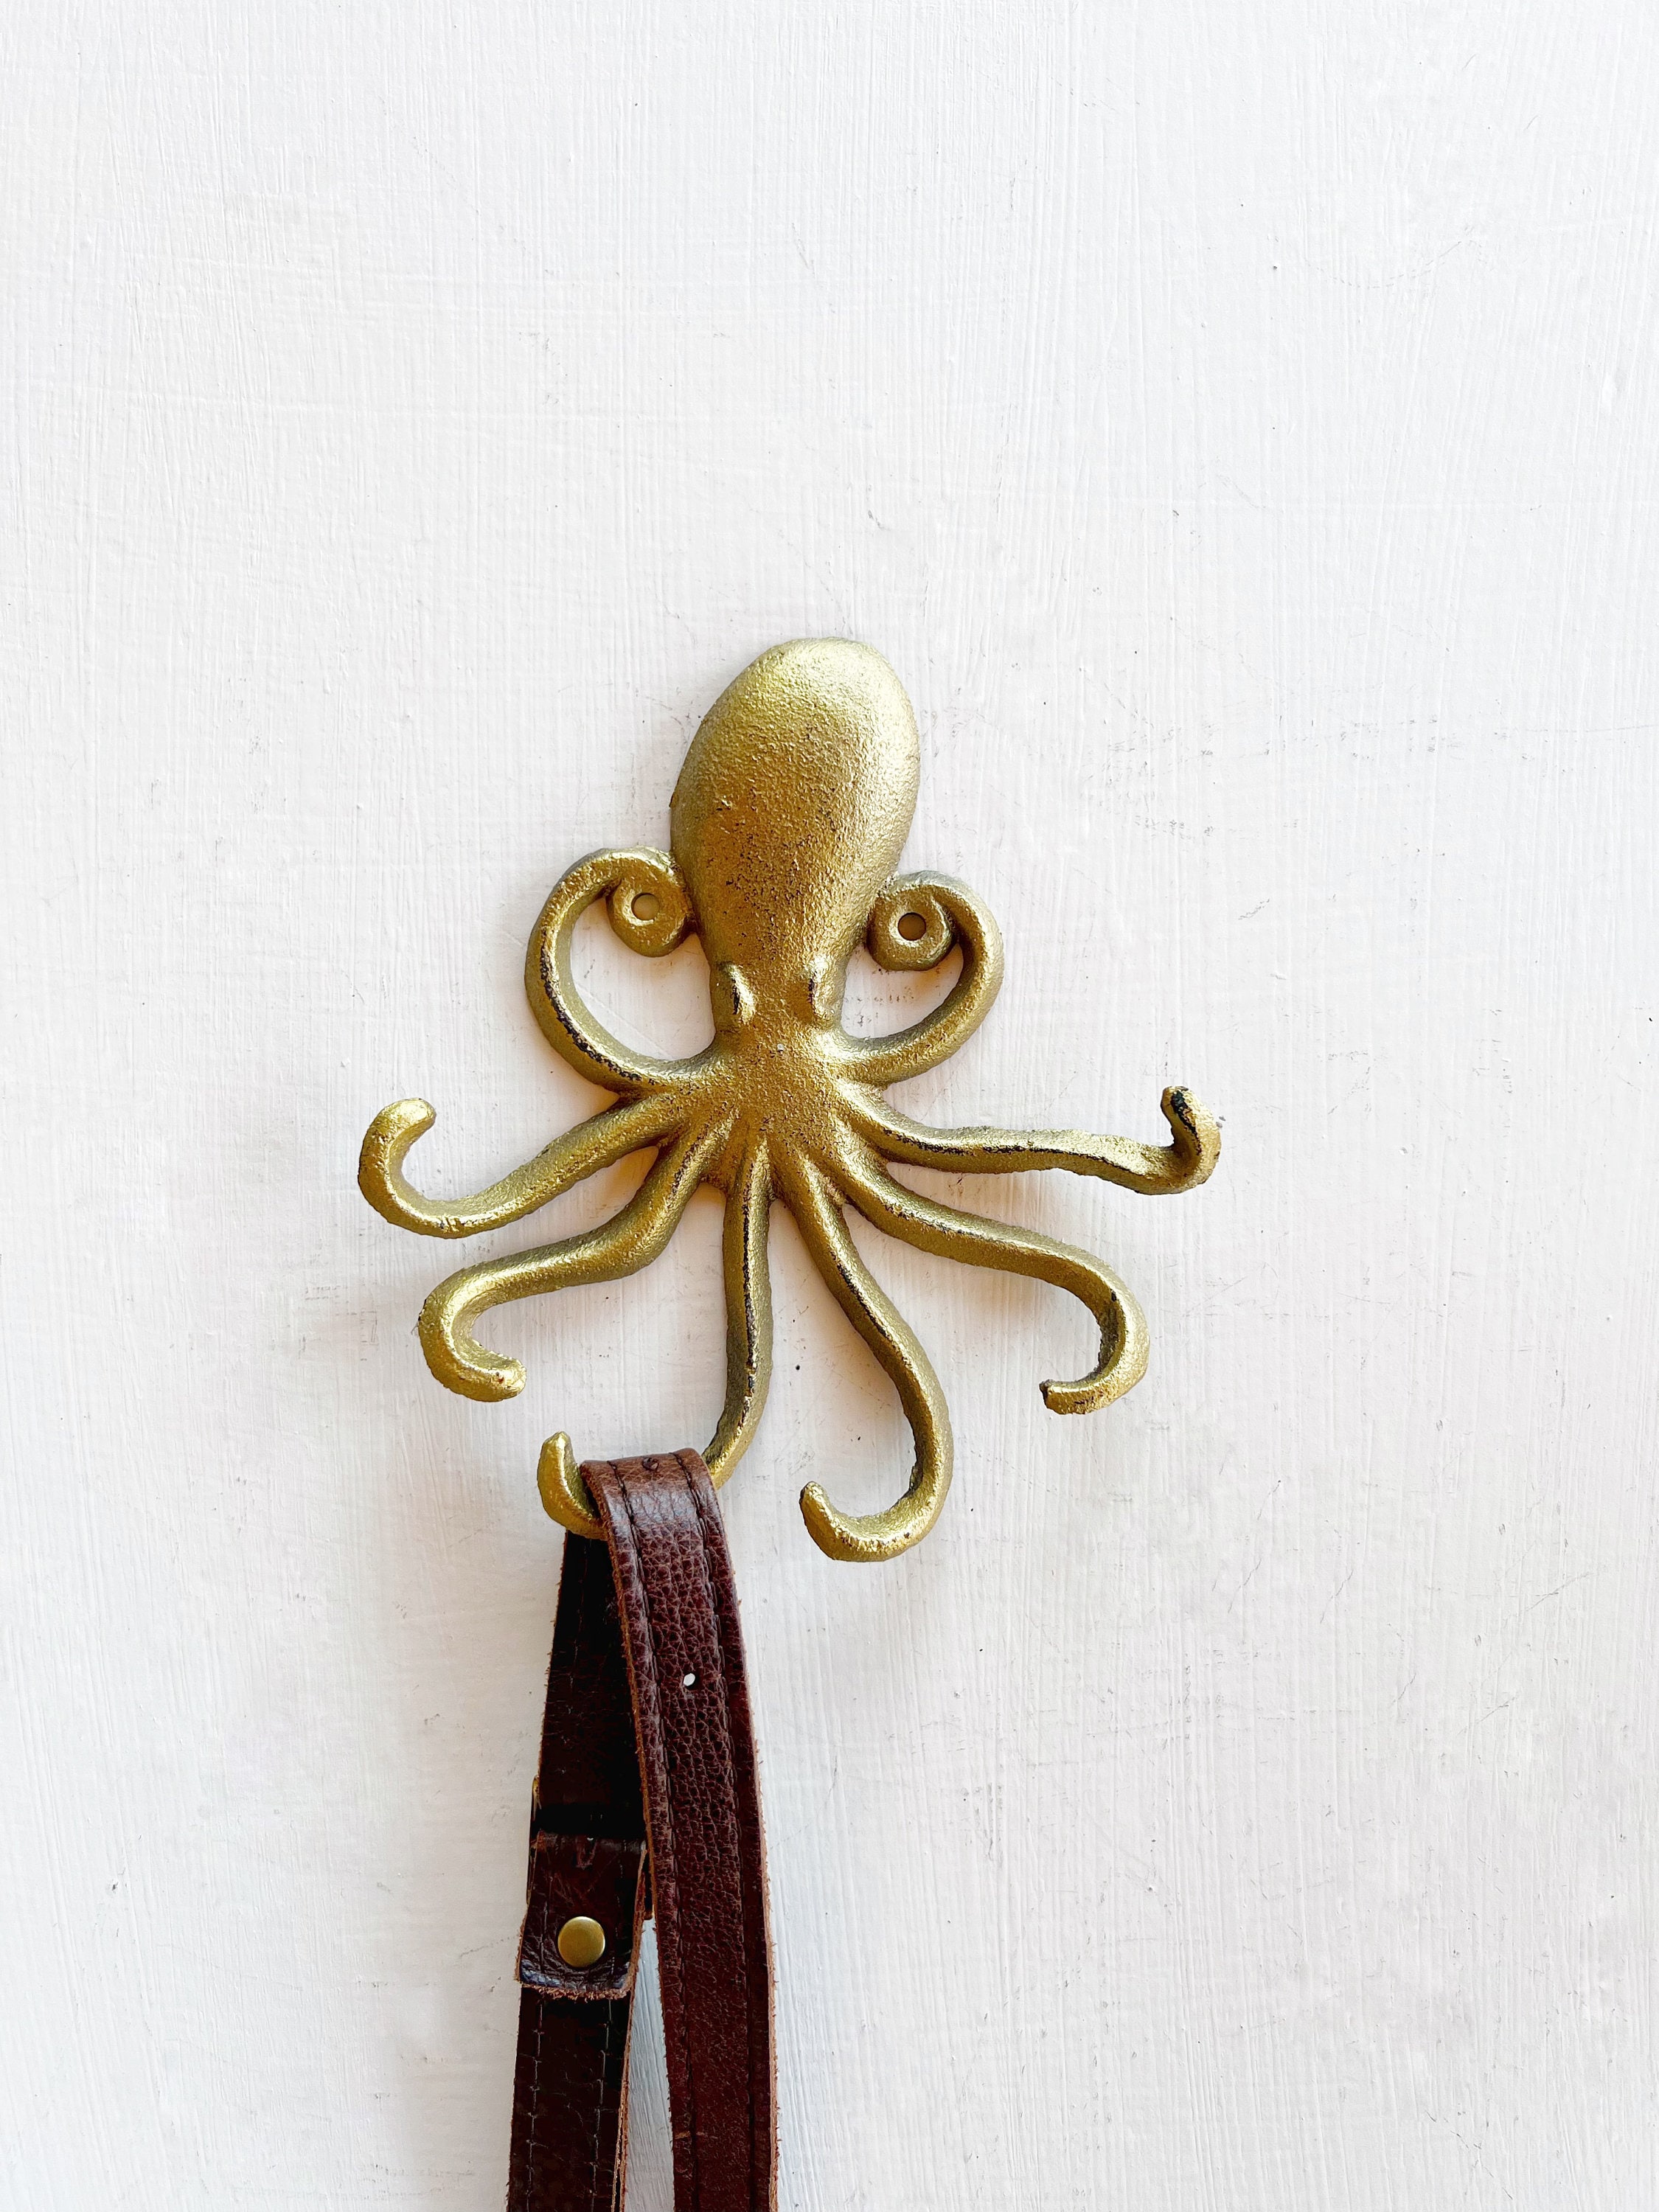 Octopus Hook, Small Wall Hooks, Nautical Hooks, Vintage Style Coat